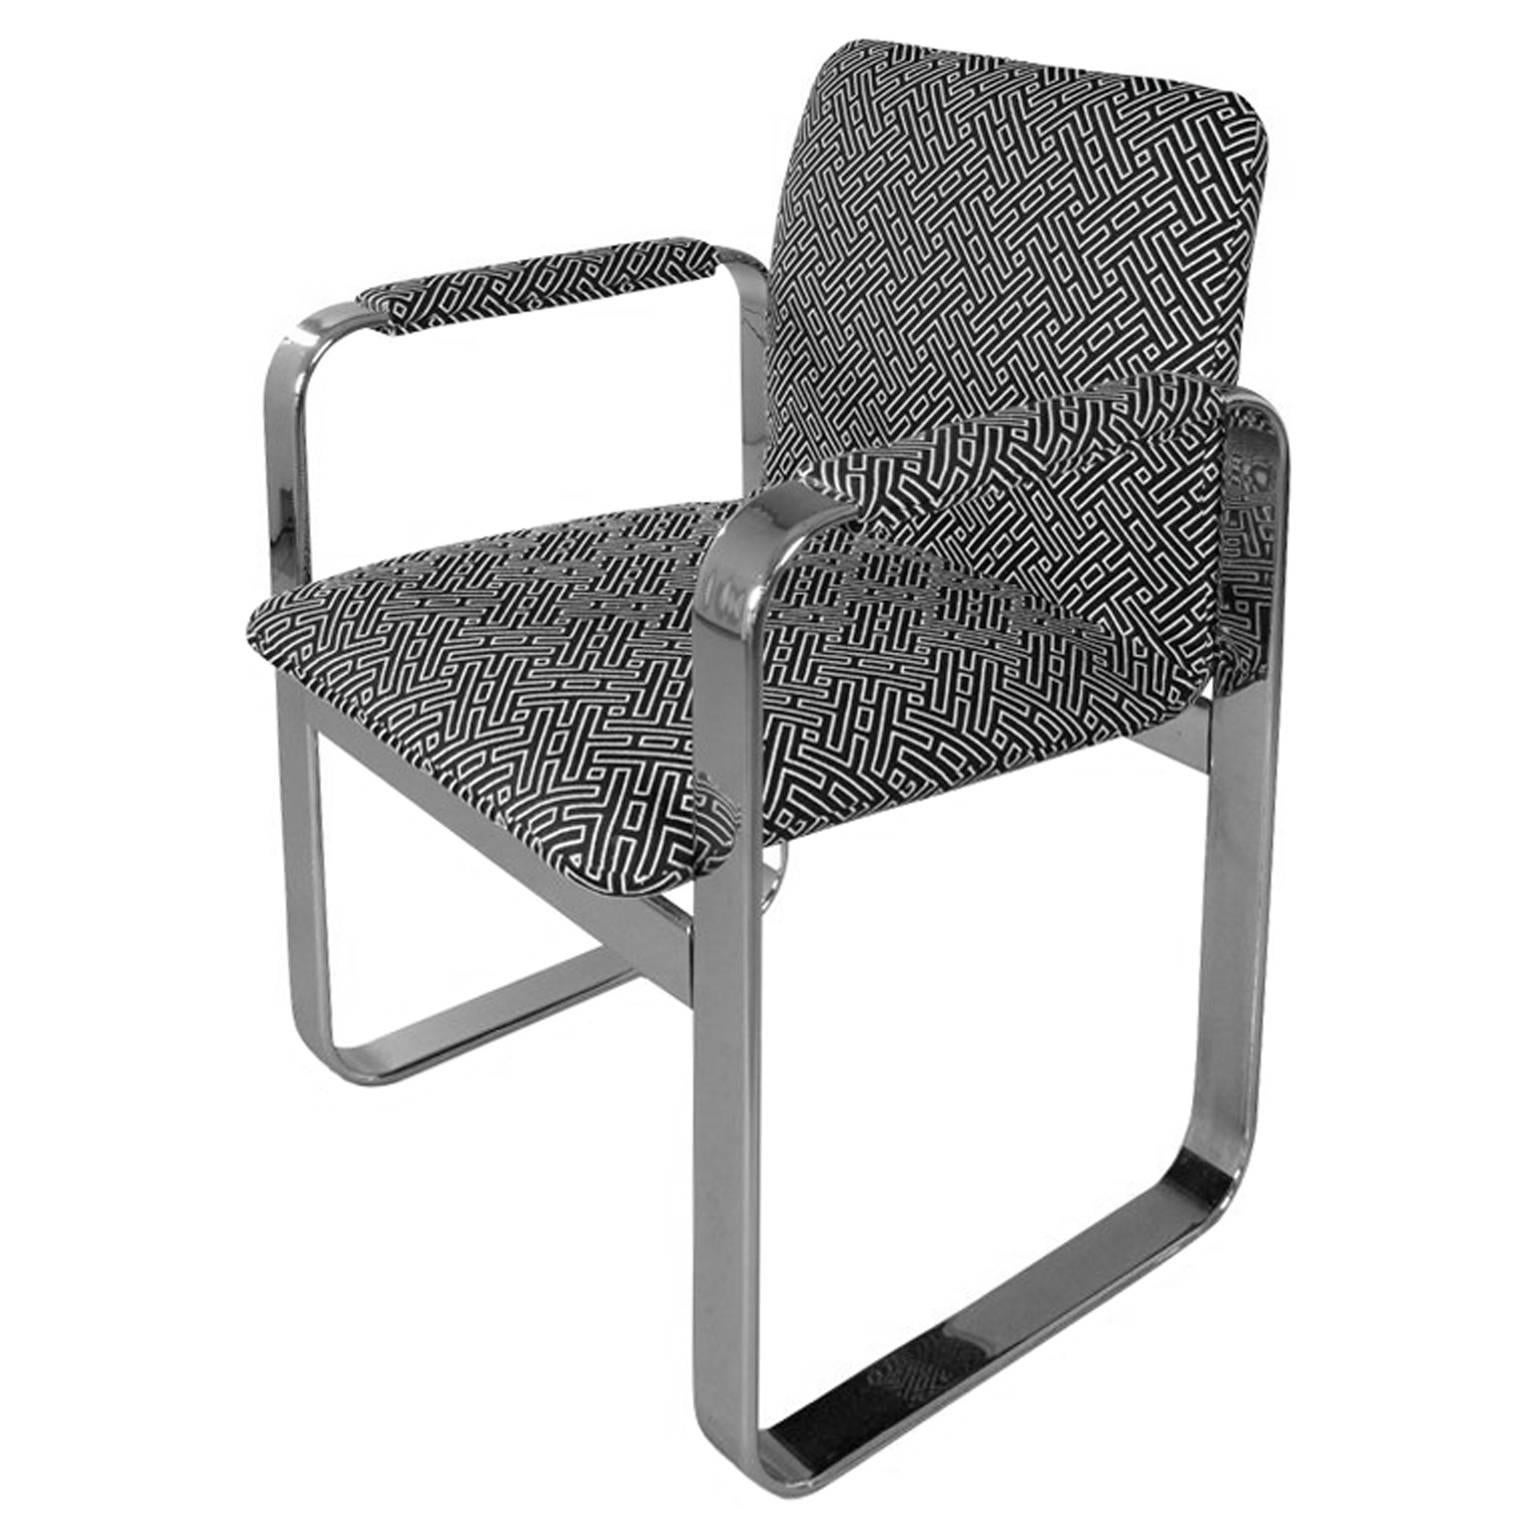 1970s Rounded Rectangular Chrome Armchair in Black & White Geometric Upholstery